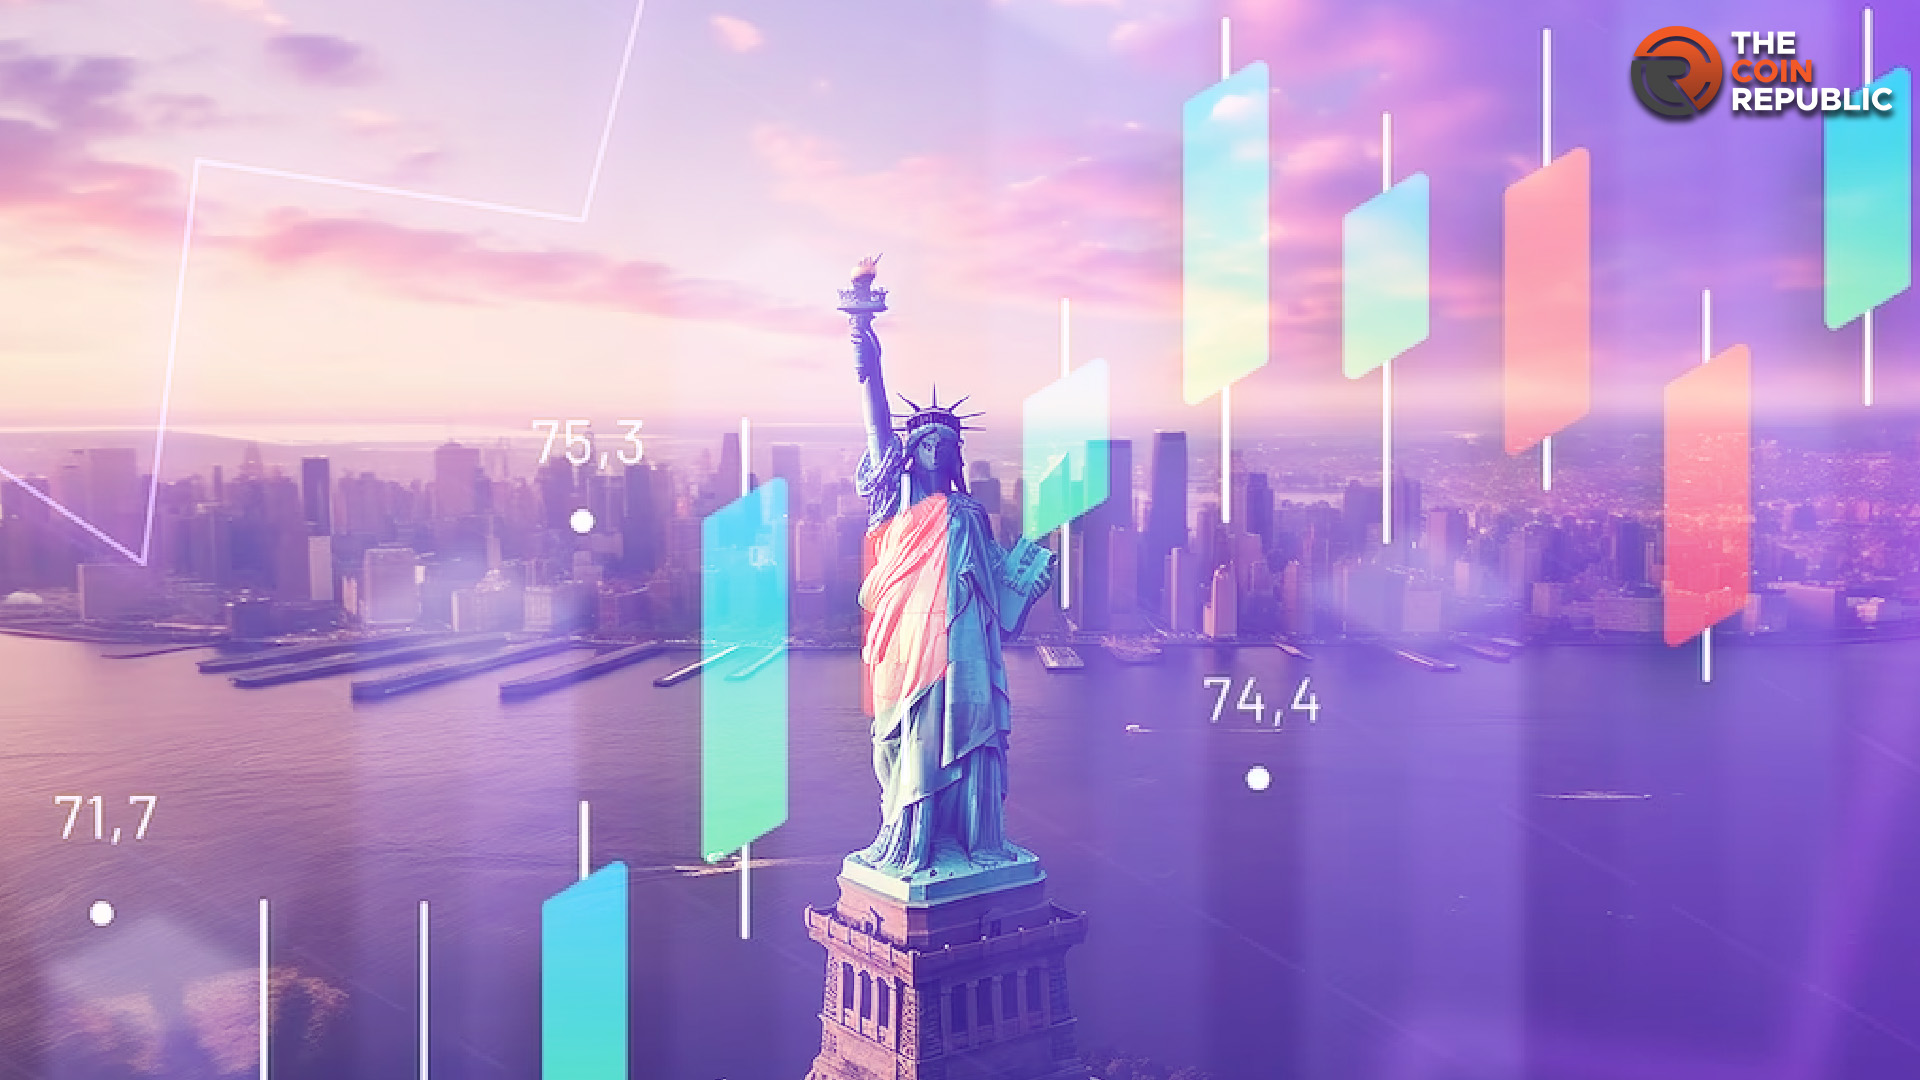 Top 5 US Stocks That Grew Popular Among Investors This Week